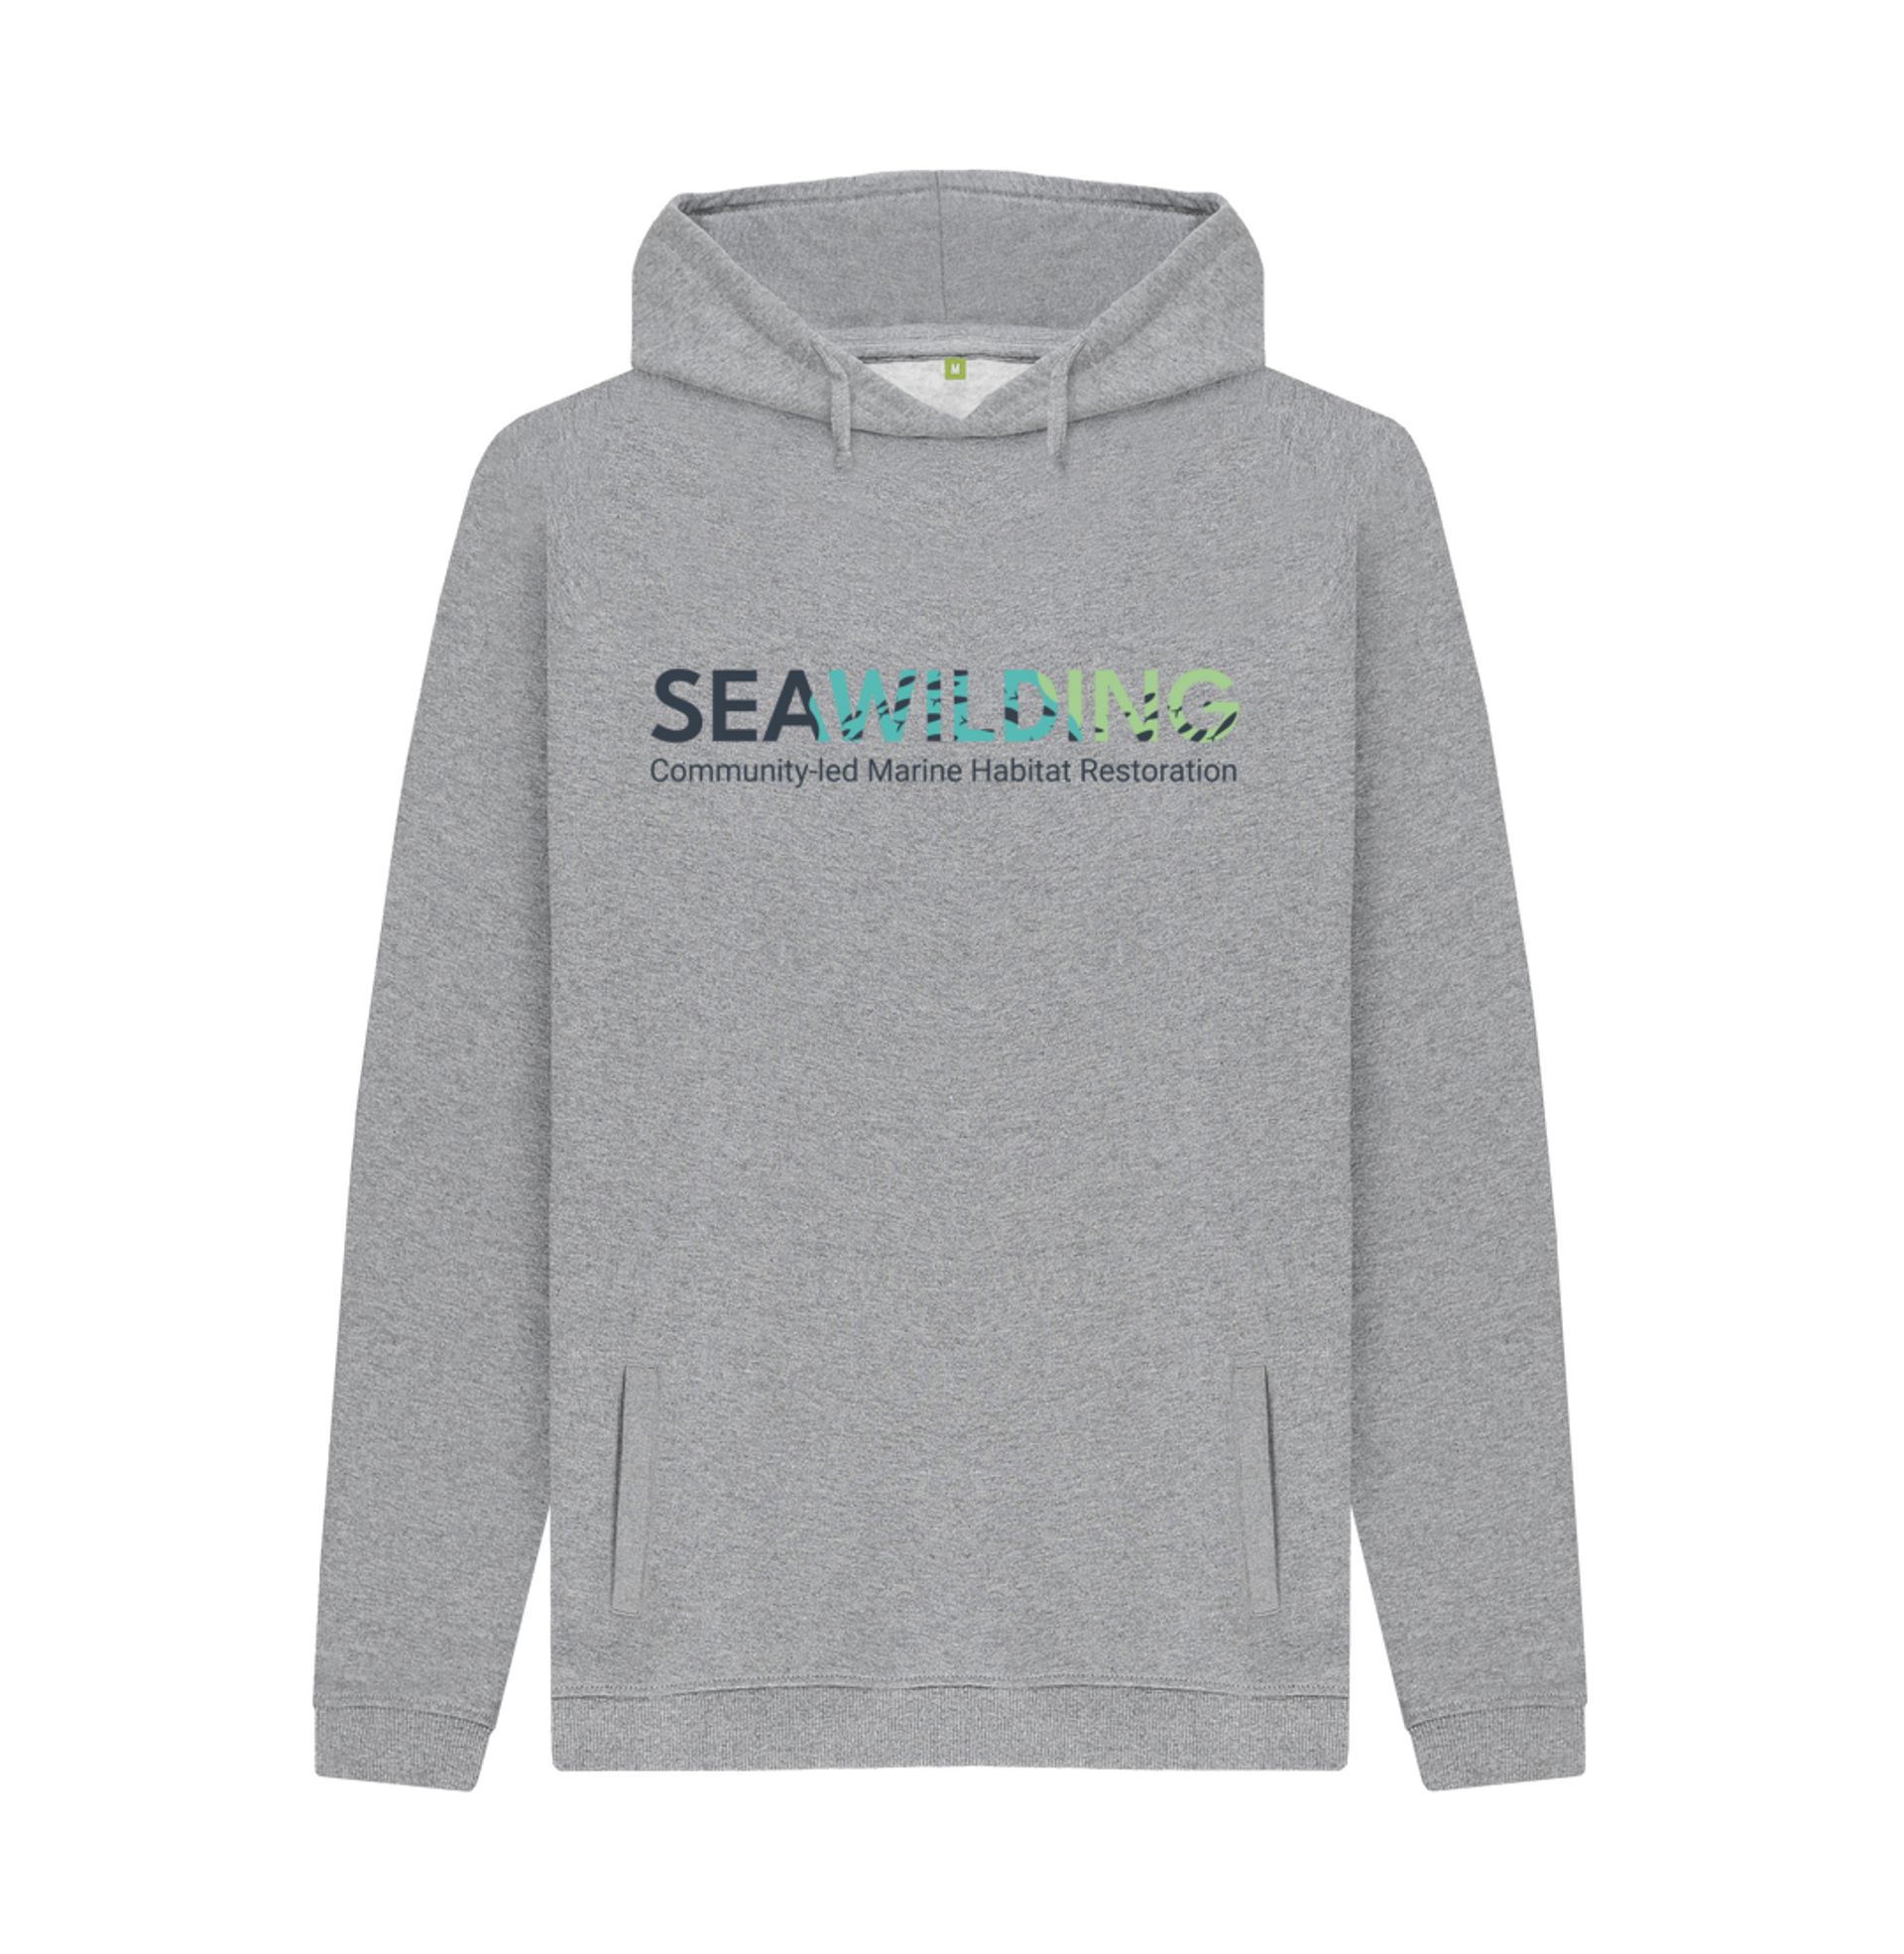 Seawilding